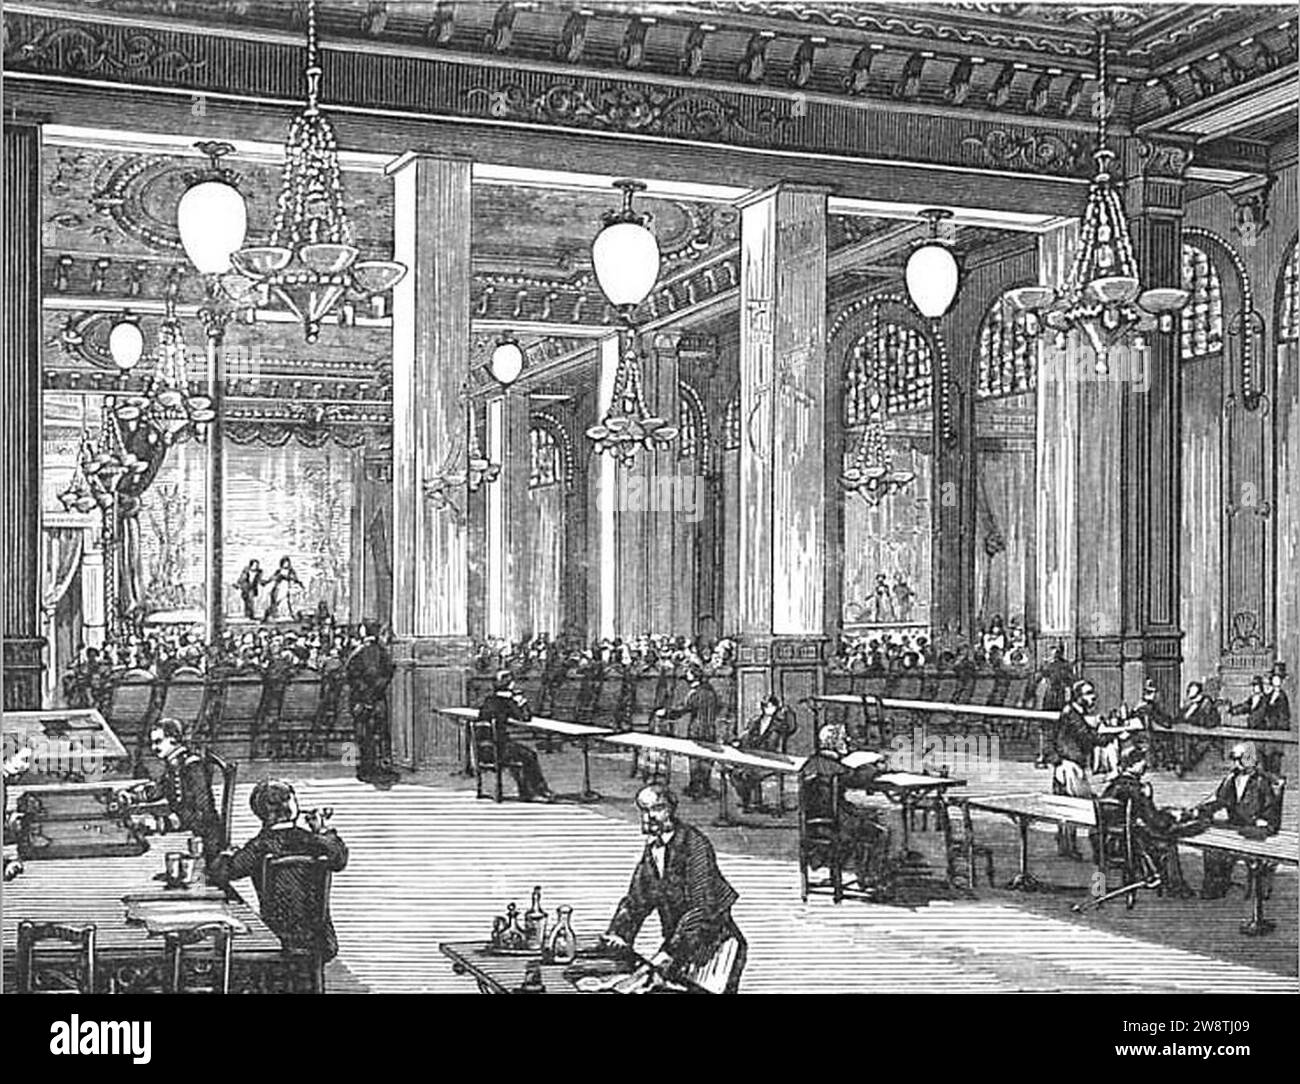 Yablochkov candles illuminating Music hall on la Place du Chateau d'eau ca 1880. Stock Photo